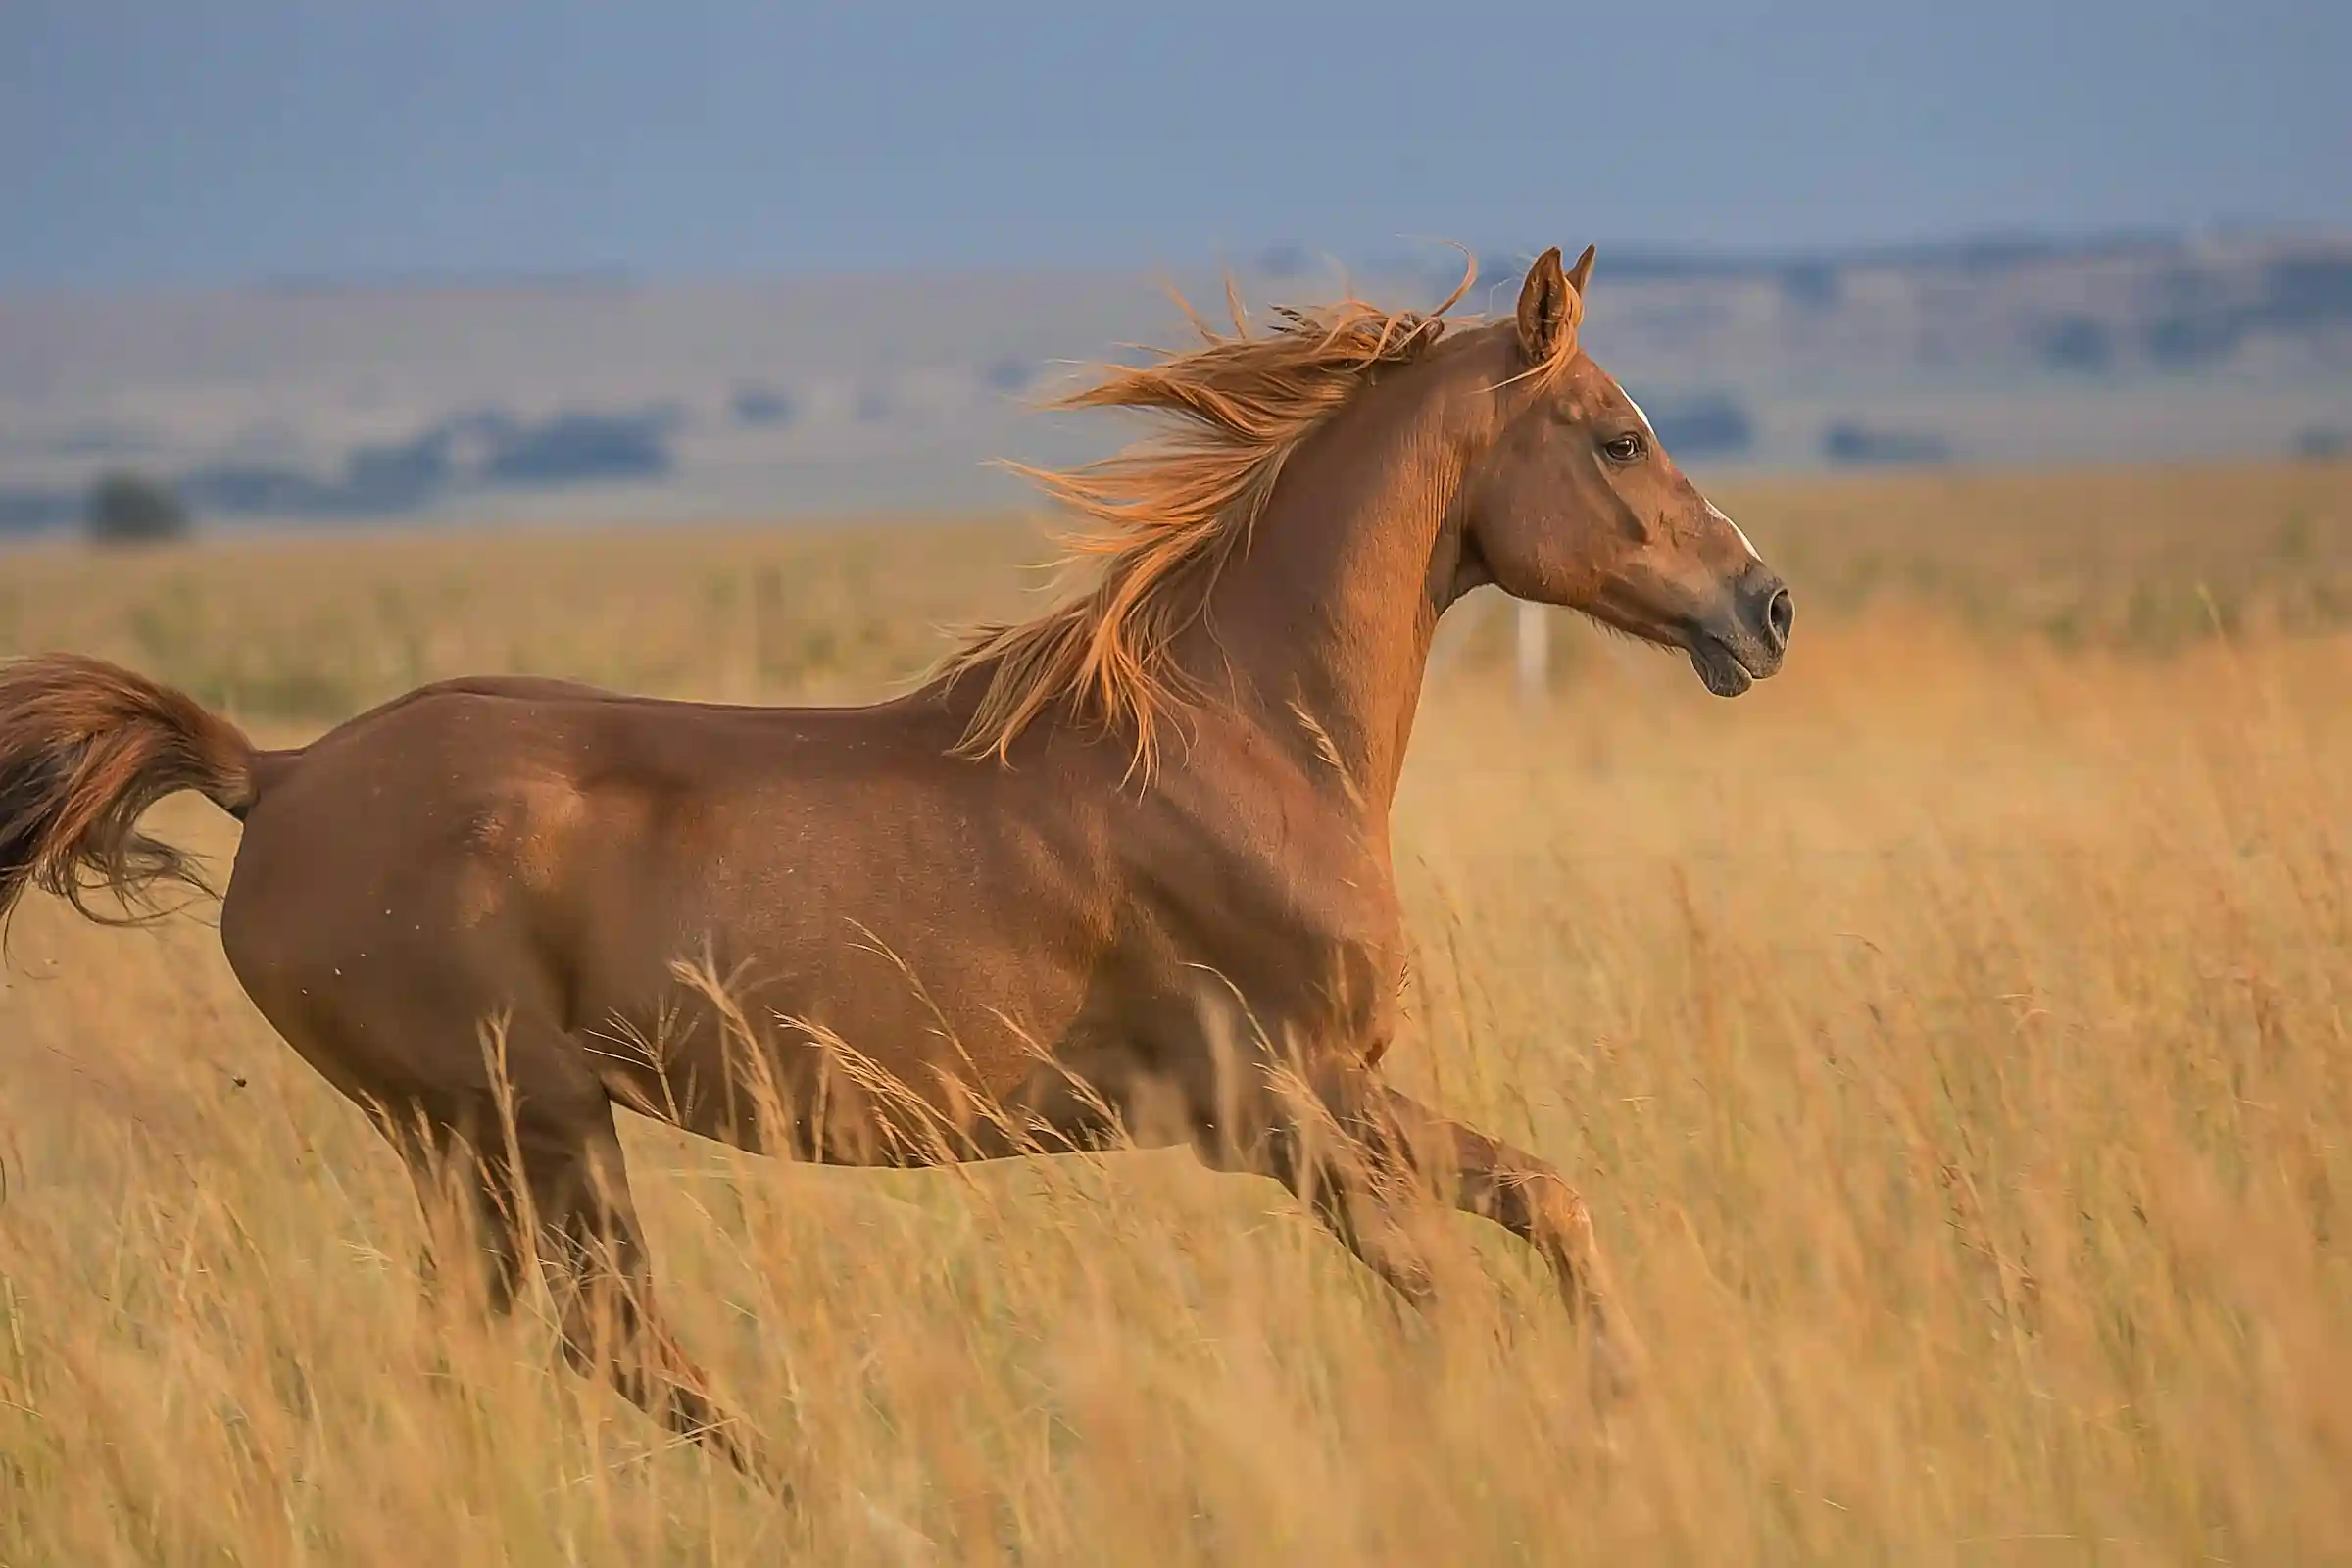 Rudos spalvos arklys bėgantis laukuose.